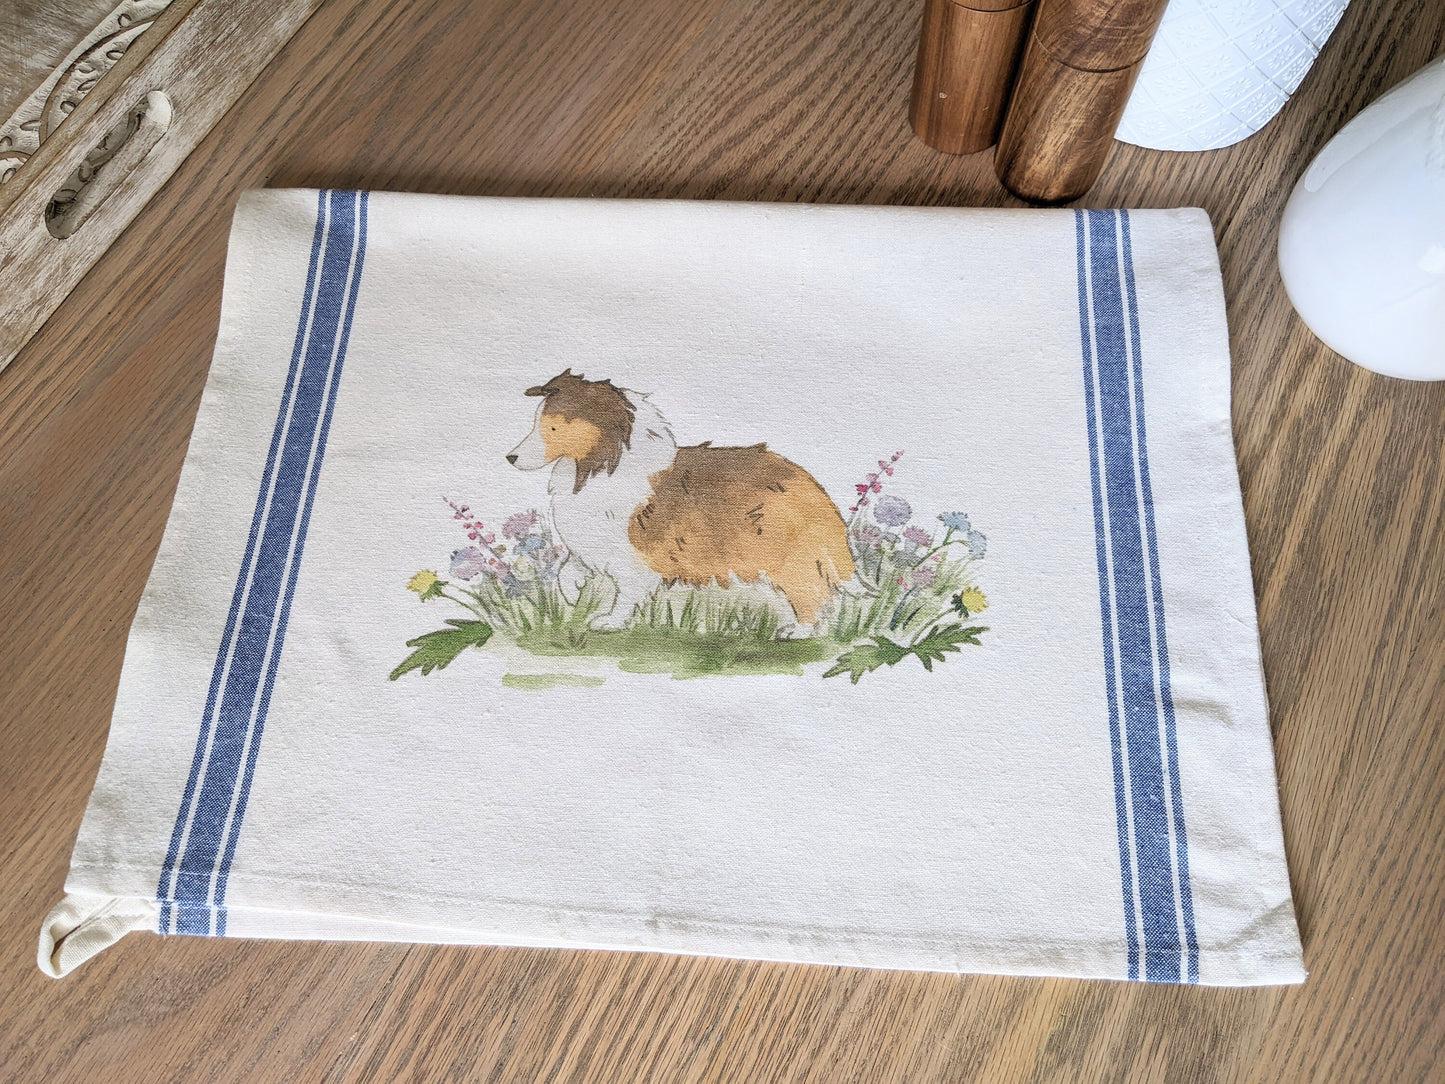 Farmhouse cotton tea towel with blue stripes and artwork of sable shetland sheepdog and flowers.